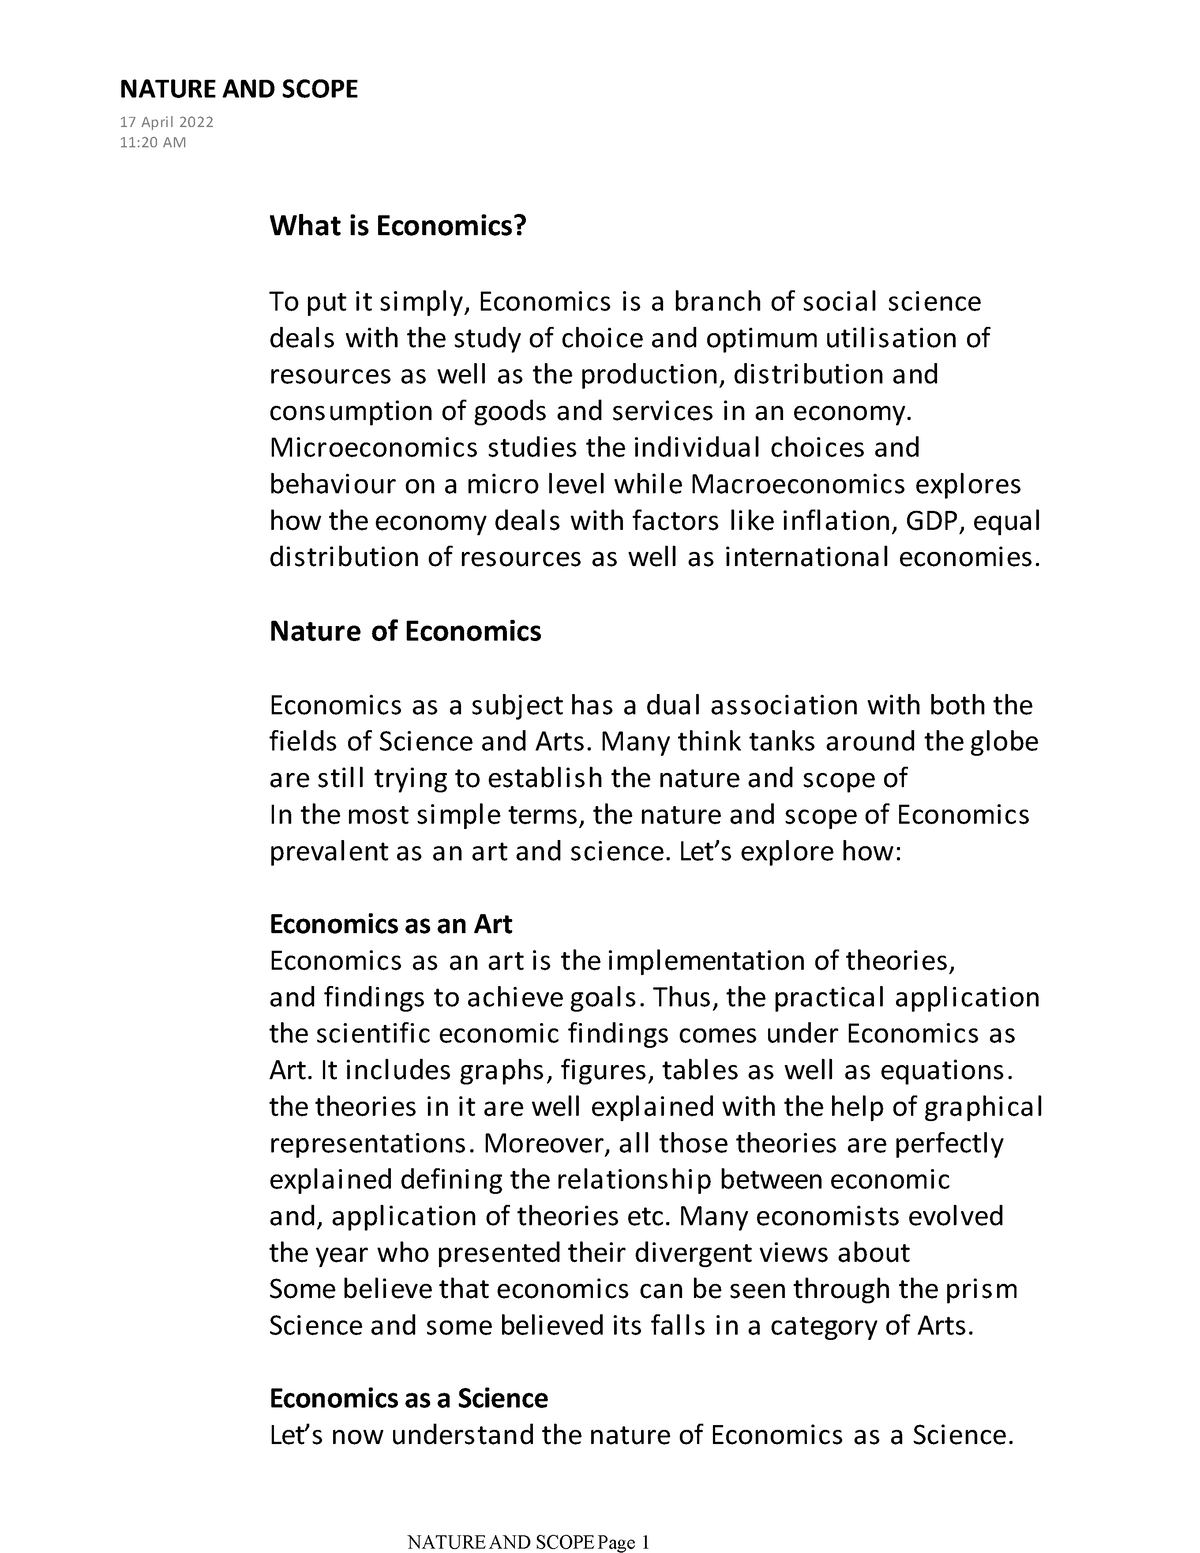 essay on nature and scope of economics